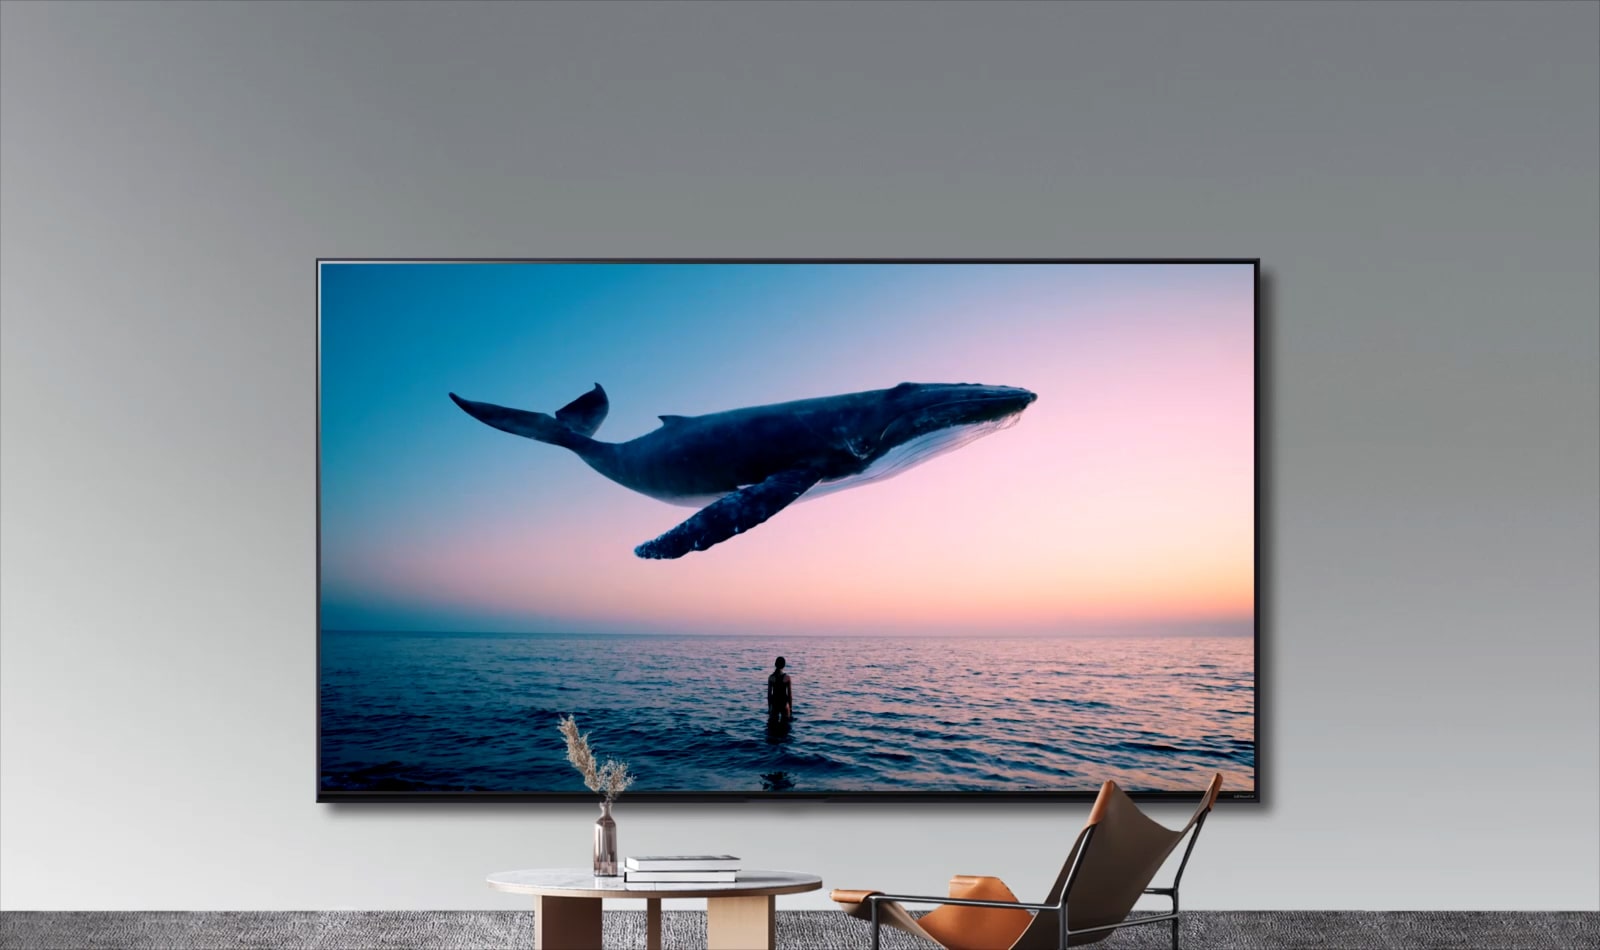 Smart TV LG de 65 pulgadas 4K NanoCell NANO77